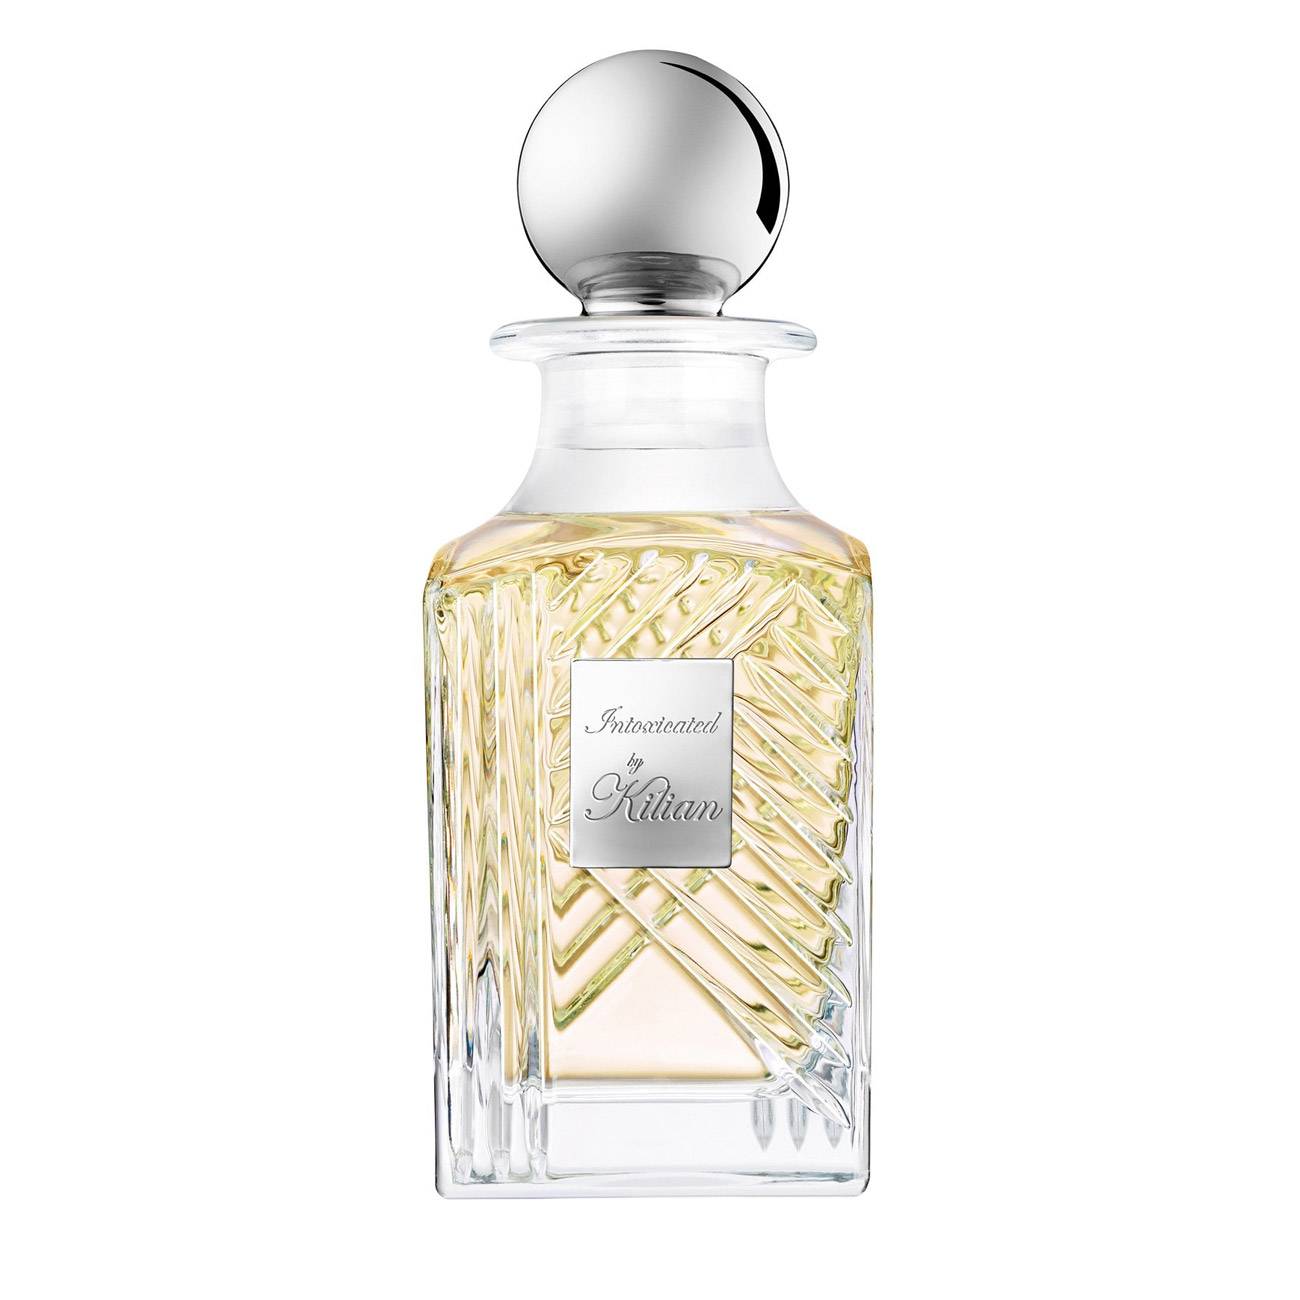 Parfum de niche Kilian INTOXICATED 250ml cu comanda online